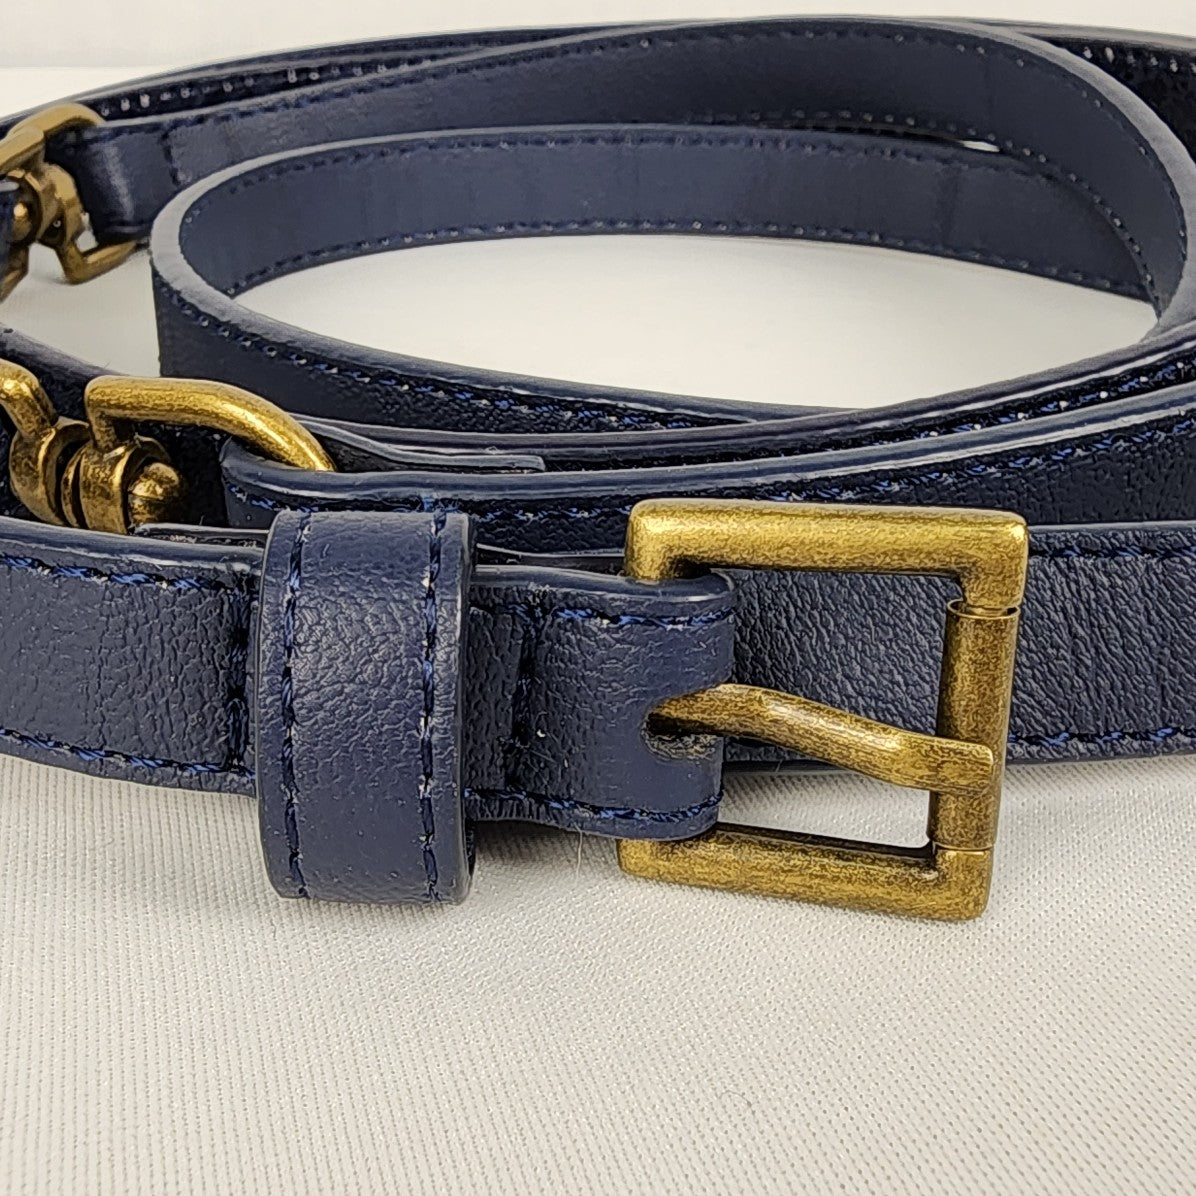 Matt & Nat Gold Hardware Vegan Leather Blue Wrap Belt Size M/L